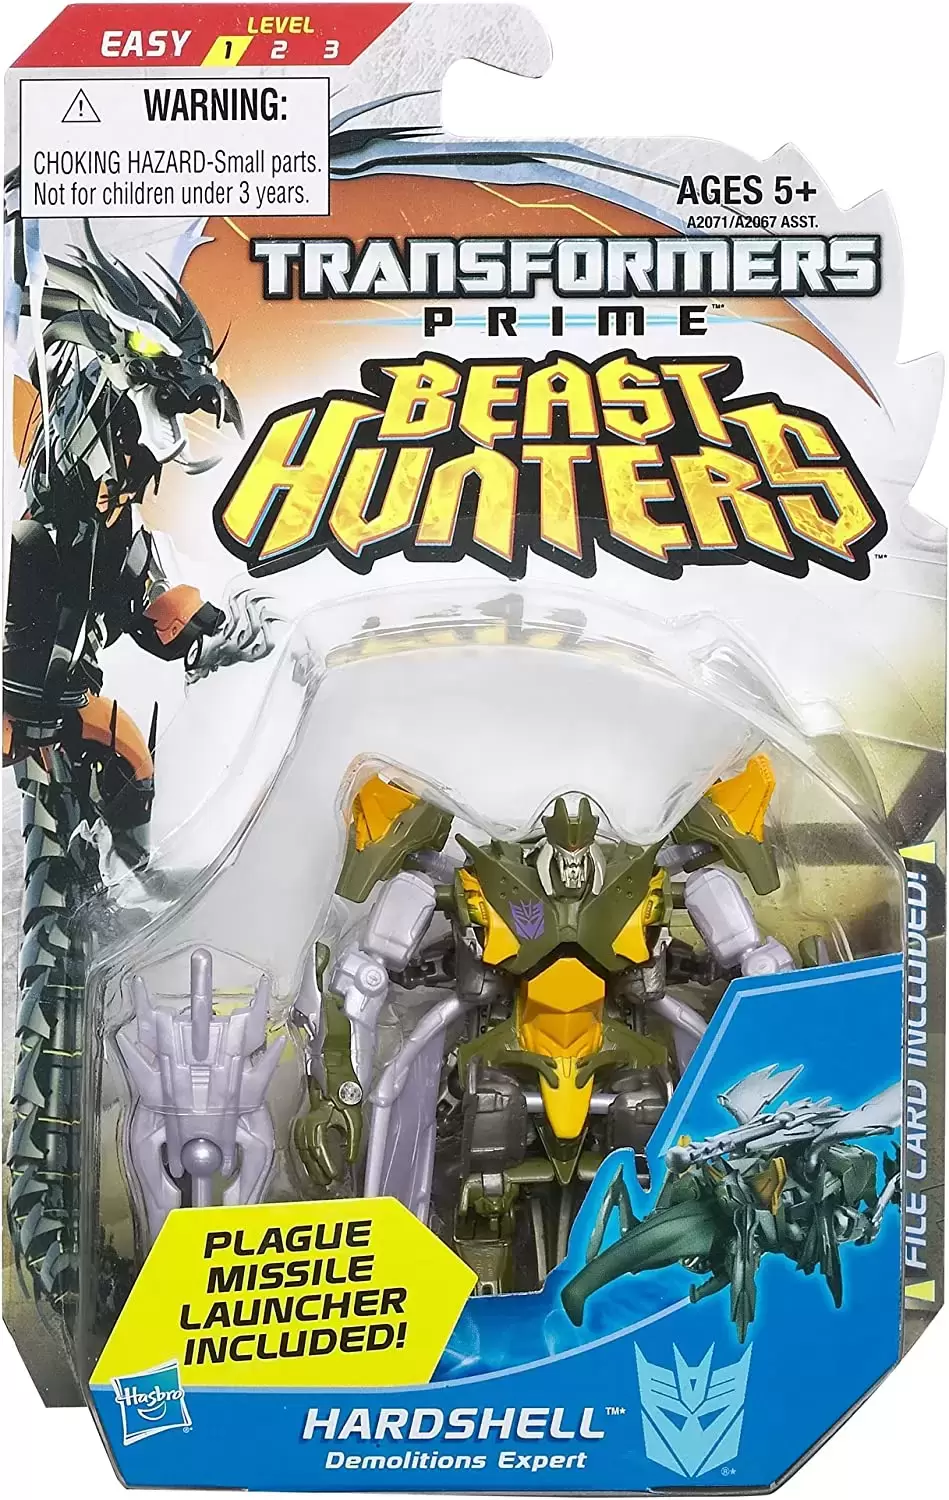 Transformers Prime Beast Hunters - Hardshell